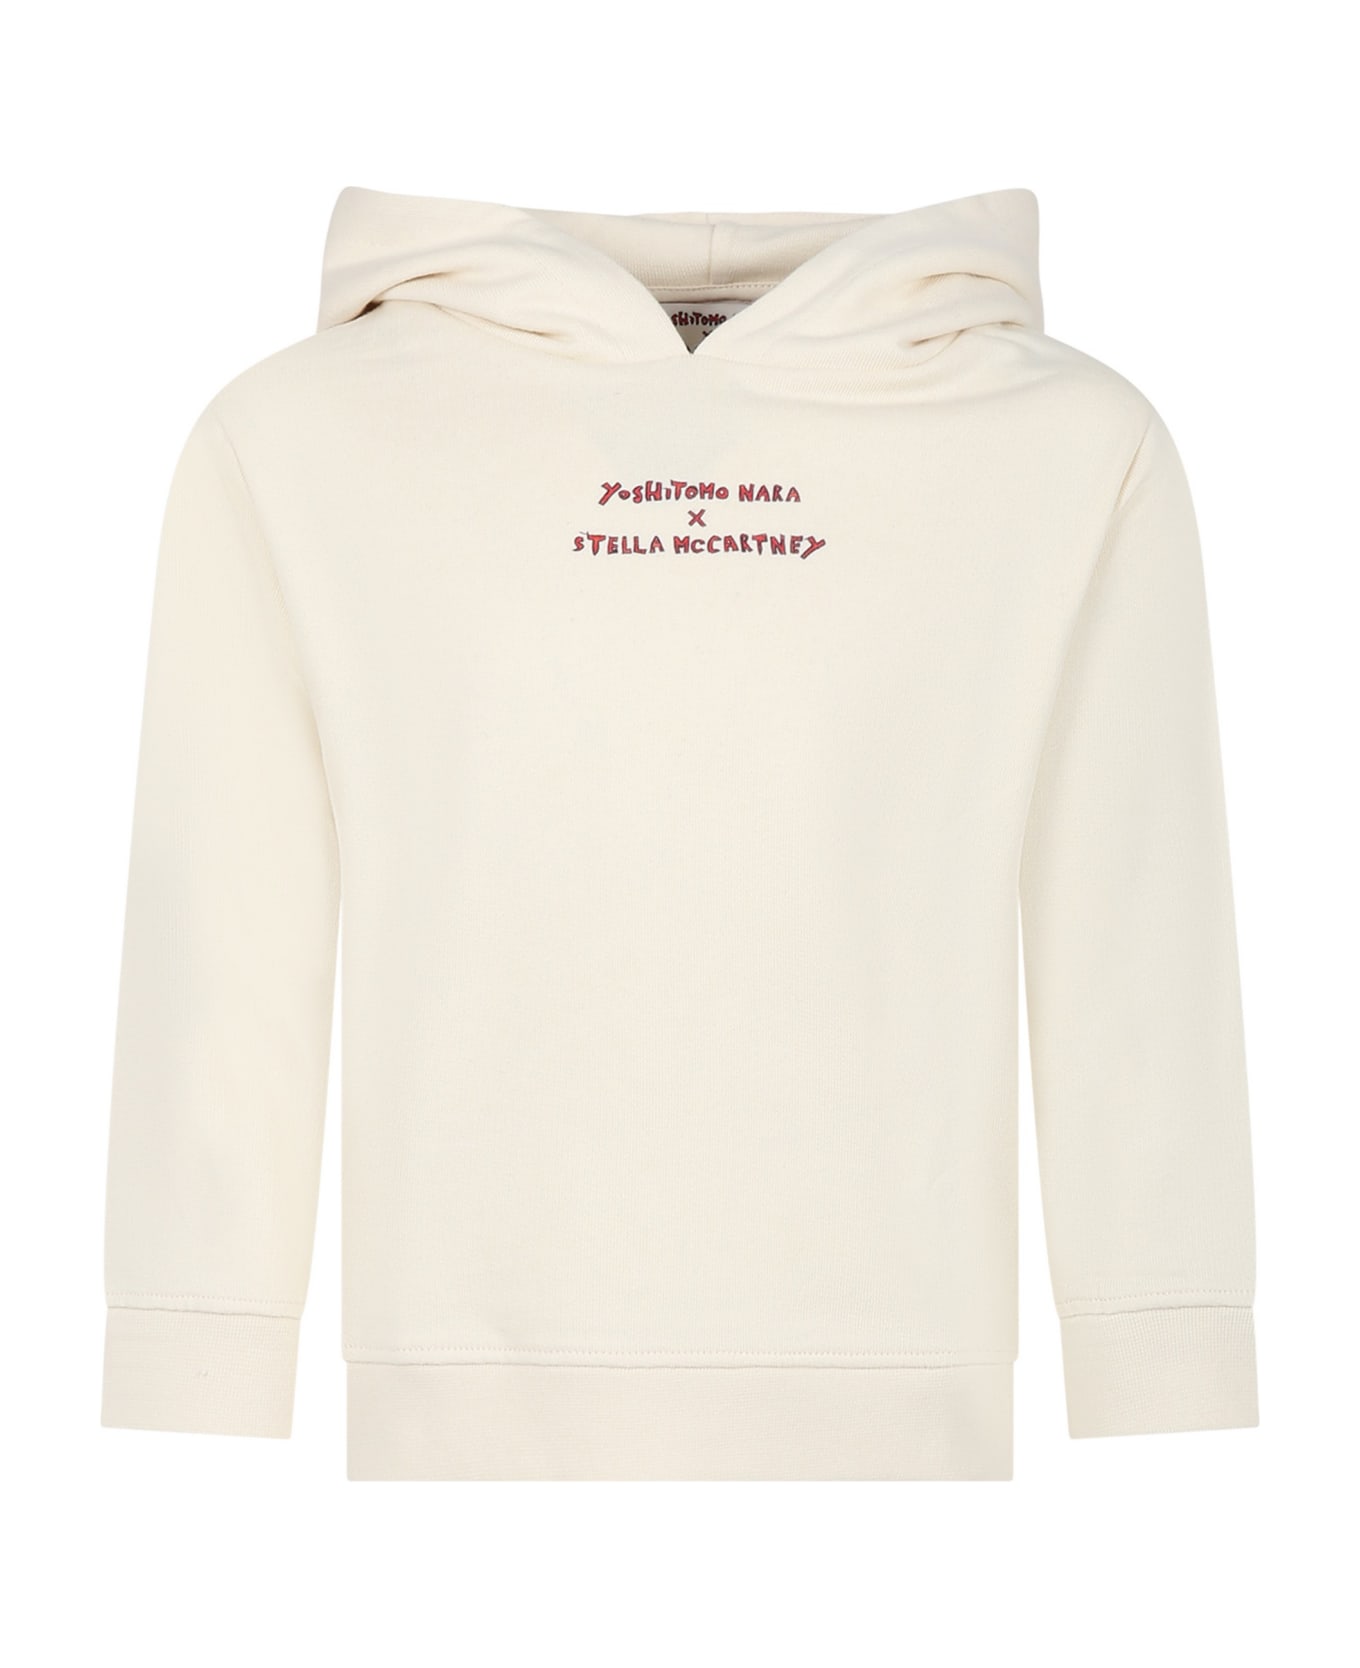 Stella McCartney Kids Ivory Sweatshirt For Girl With Logo And Print - Ivory